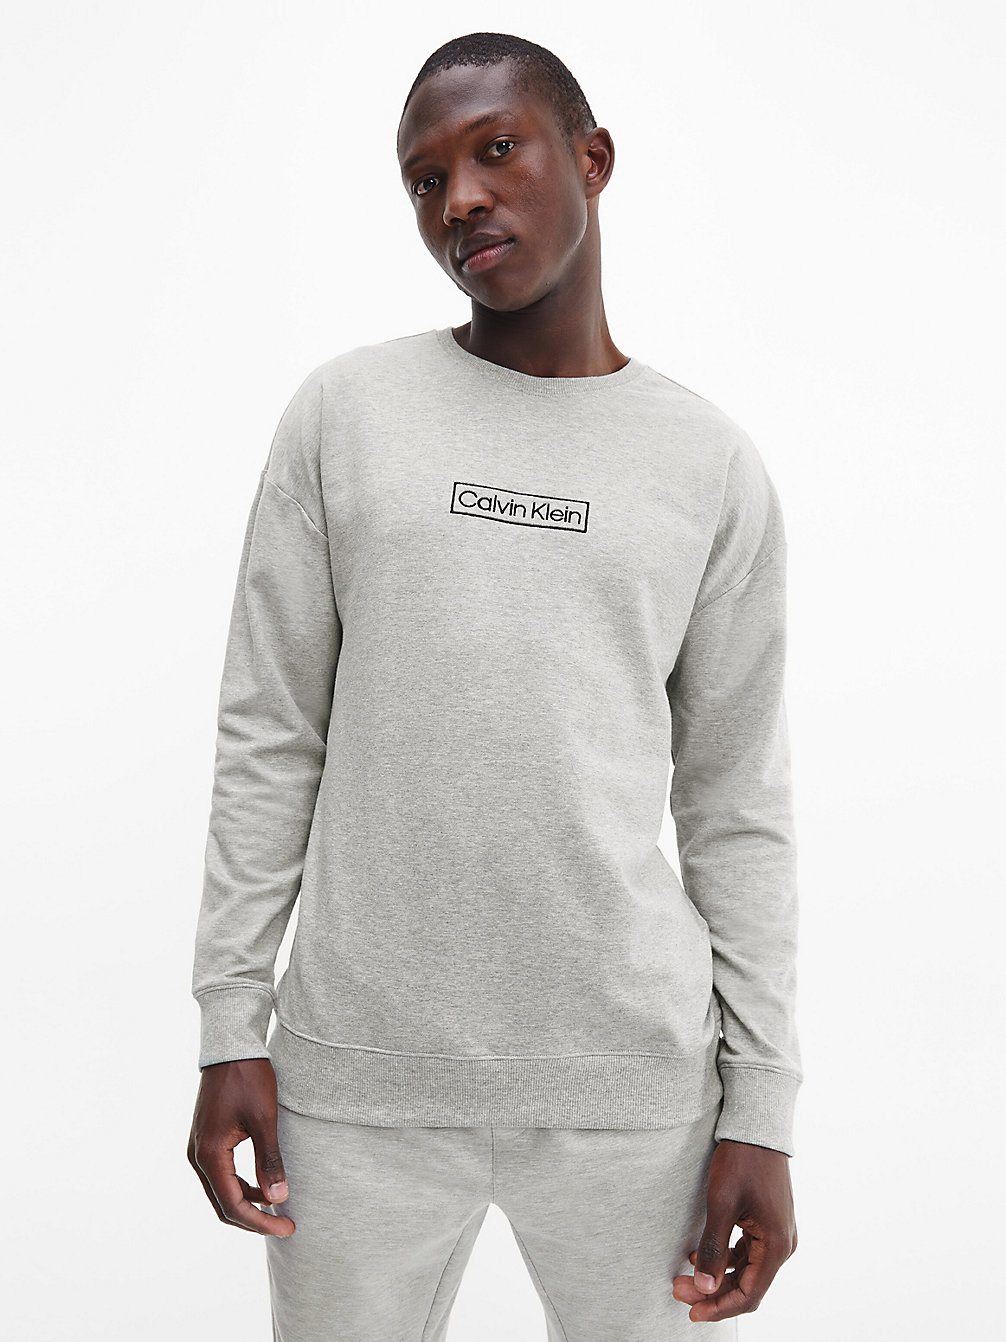 GREY HEATHER Lounge Sweatshirt - Reimagined  Heritage undefined men Calvin Klein